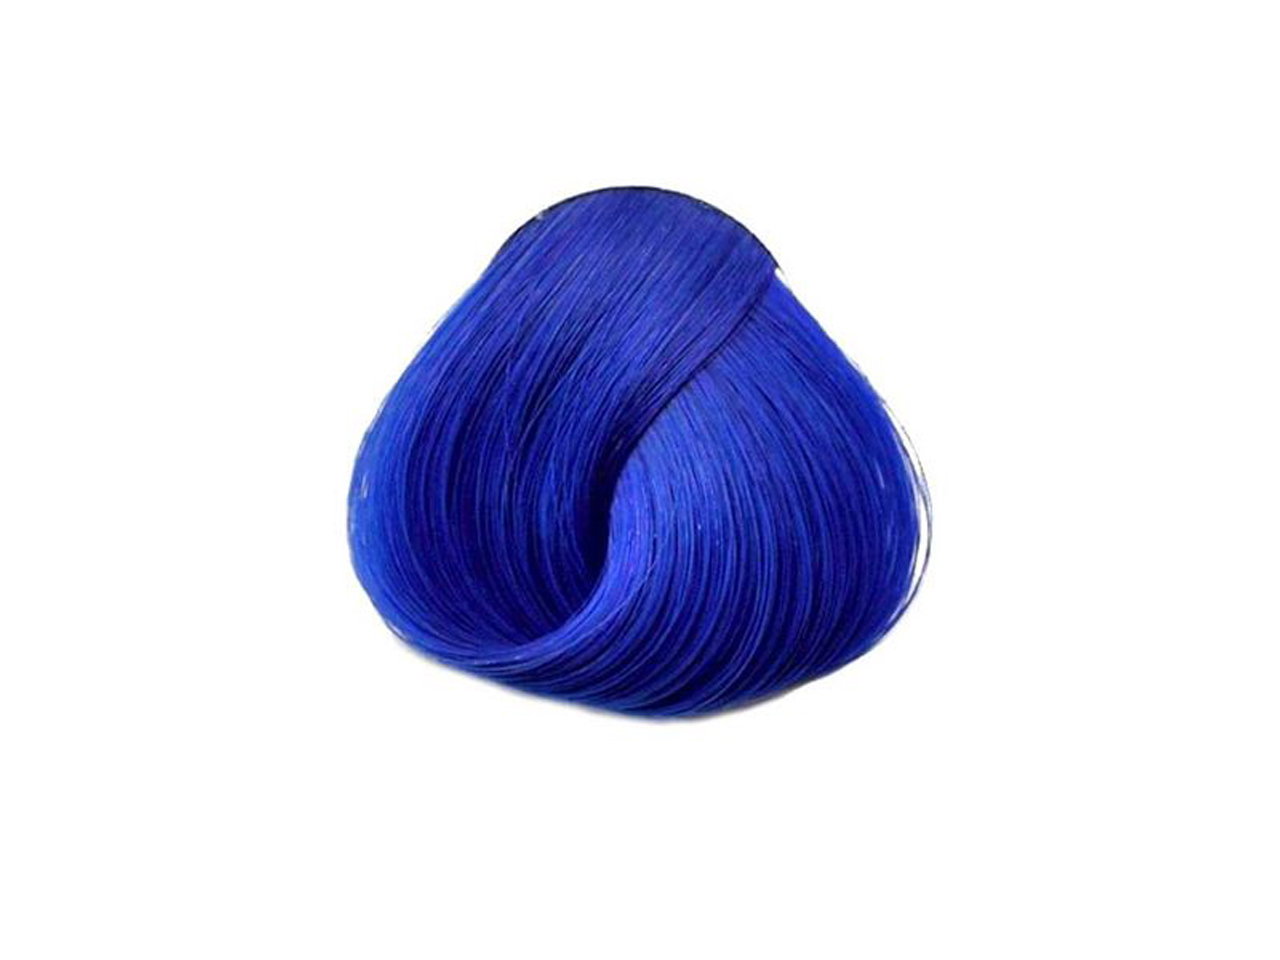 5. La Riche Directions Blue Hair Dye - wide 2